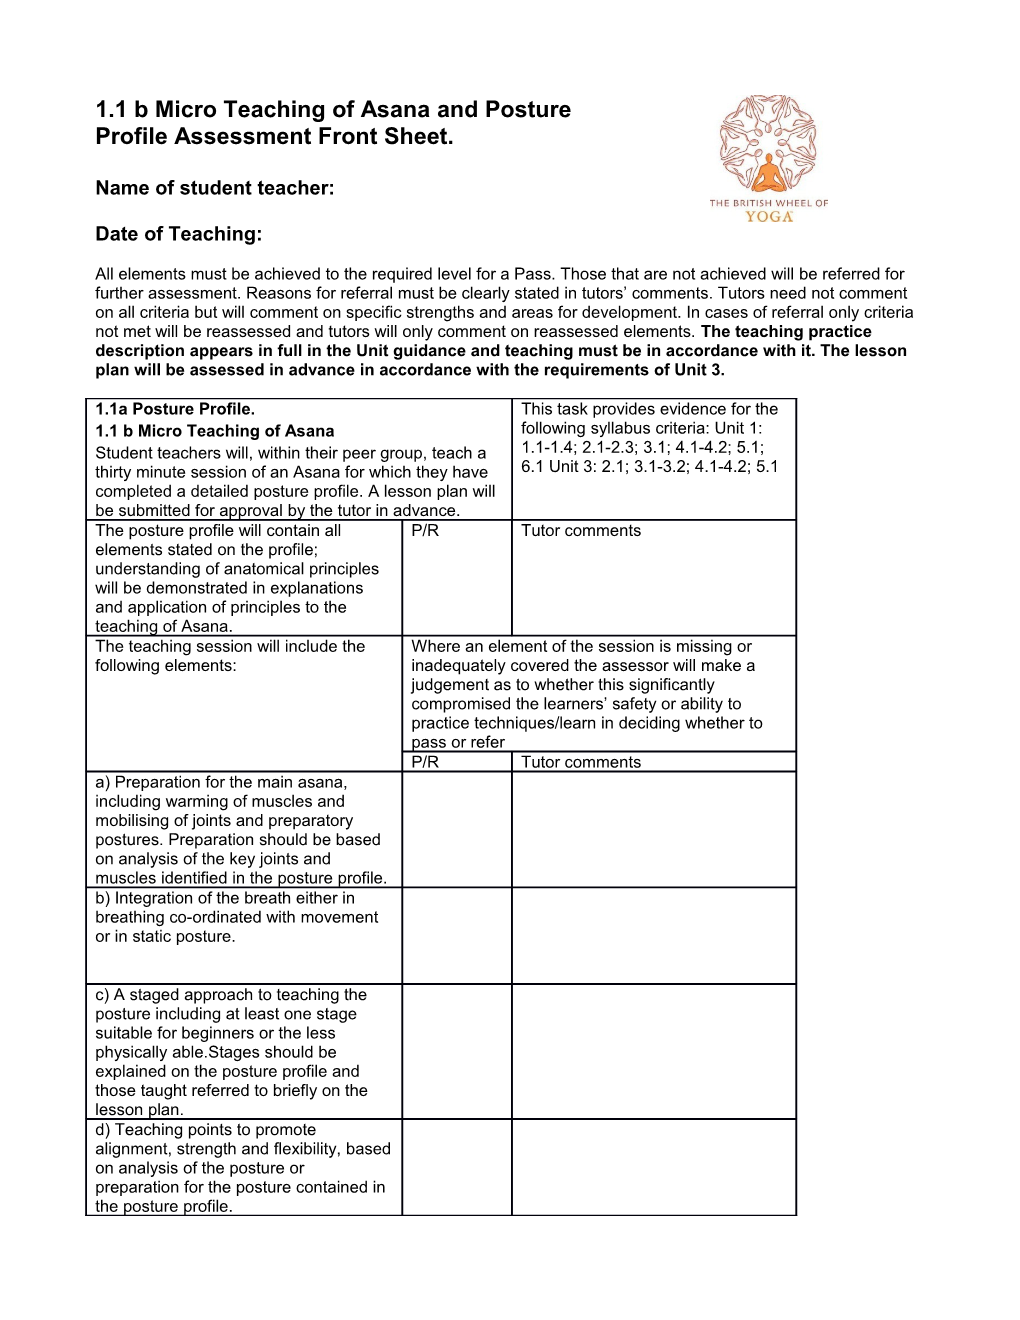 Profile Assessment Front Sheet